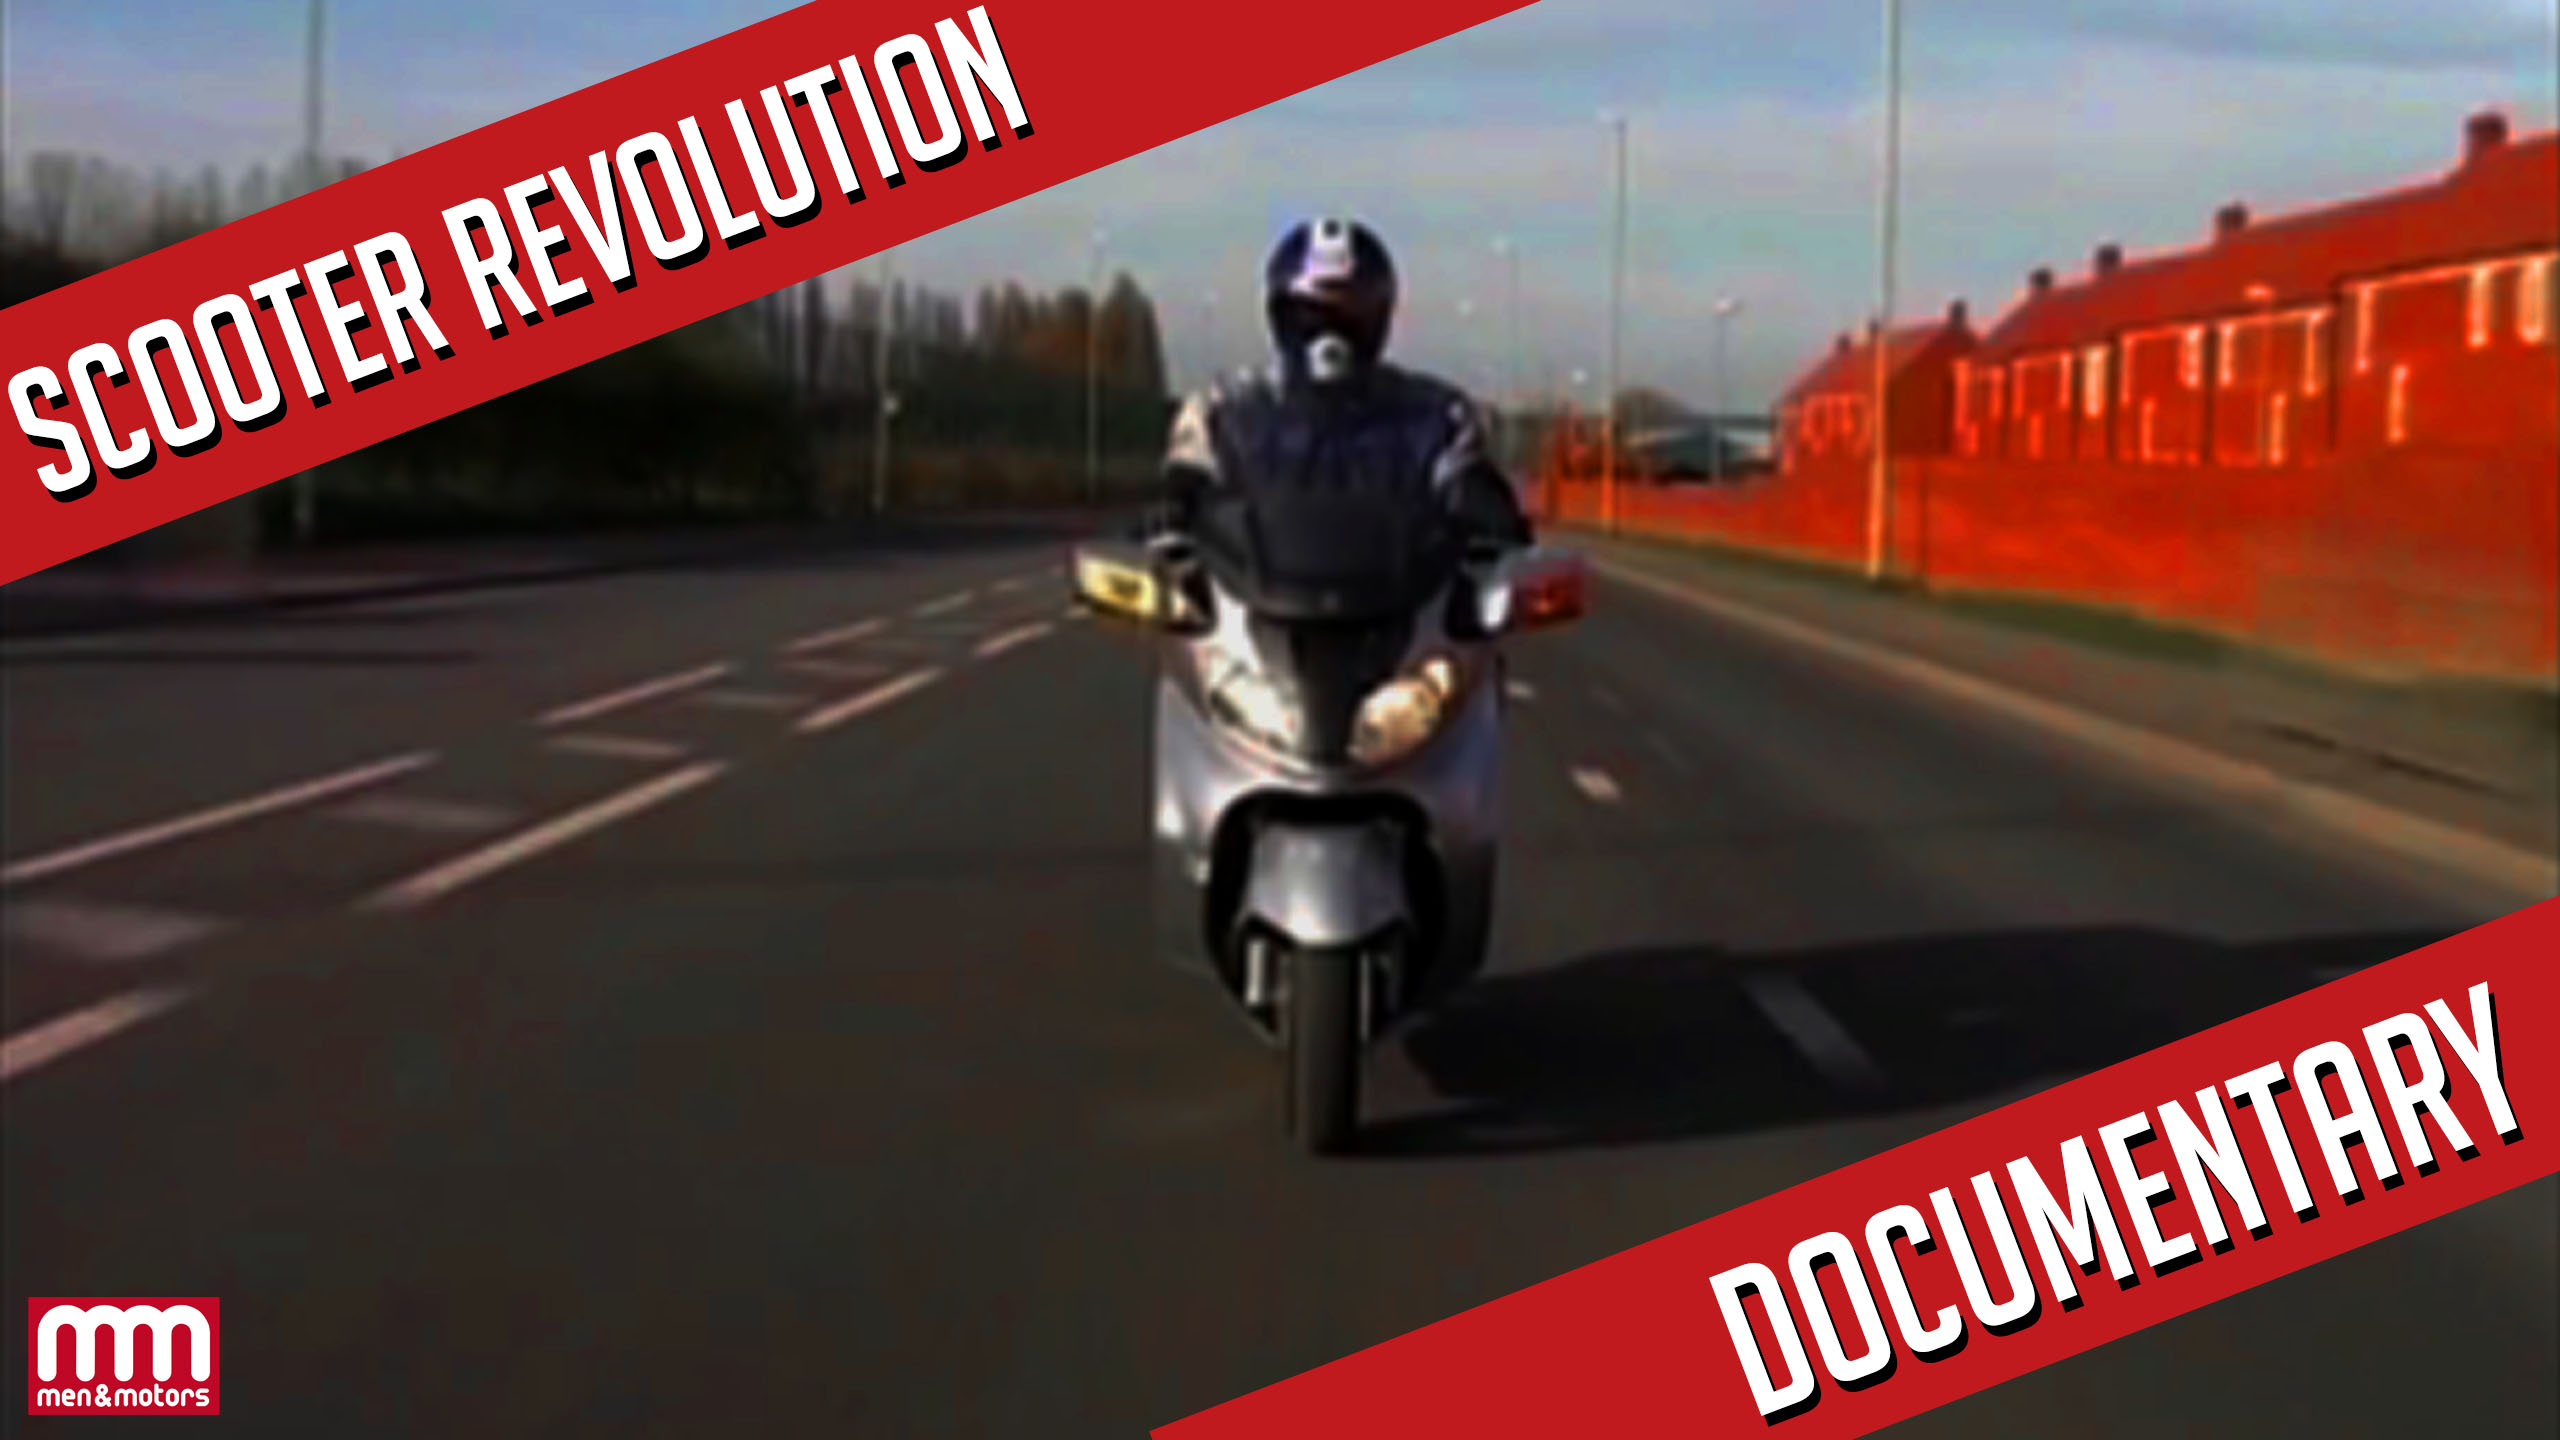 Scooter Revolution – Documentary